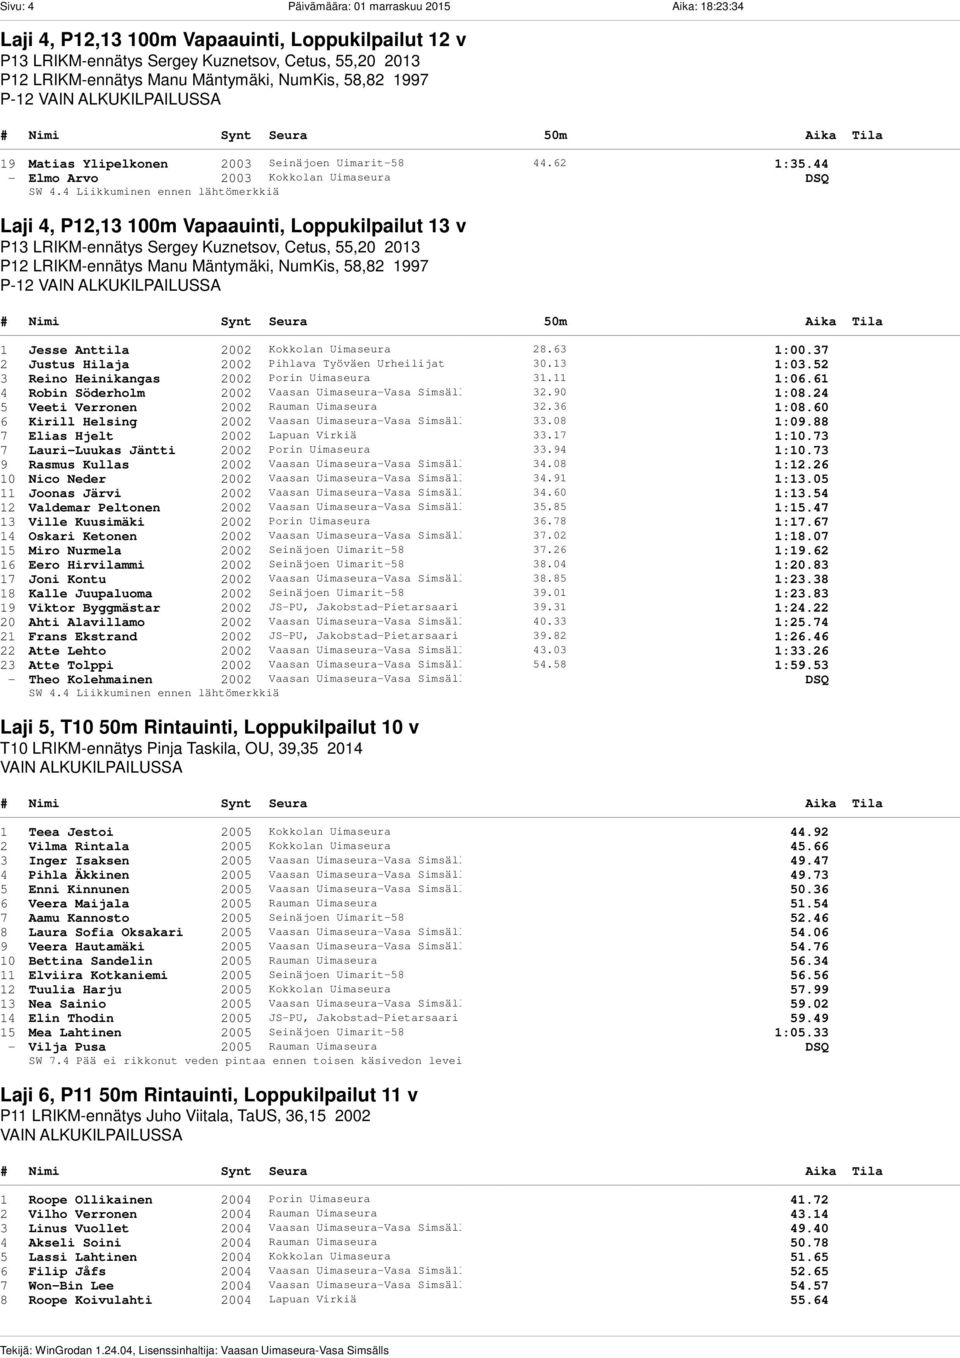 44 - Elmo Arvo 2003 Kokkolan Uimaseura DSQ Laji 4, P12,13 100m Vapaauinti, Loppukilpailut 13 v P13 LRIKM-ennätys Sergey Kuznetsov, Cetus, 55,20 2013 P12 LRIKM-ennätys Manu Mäntymäki, NumKis, 58,82